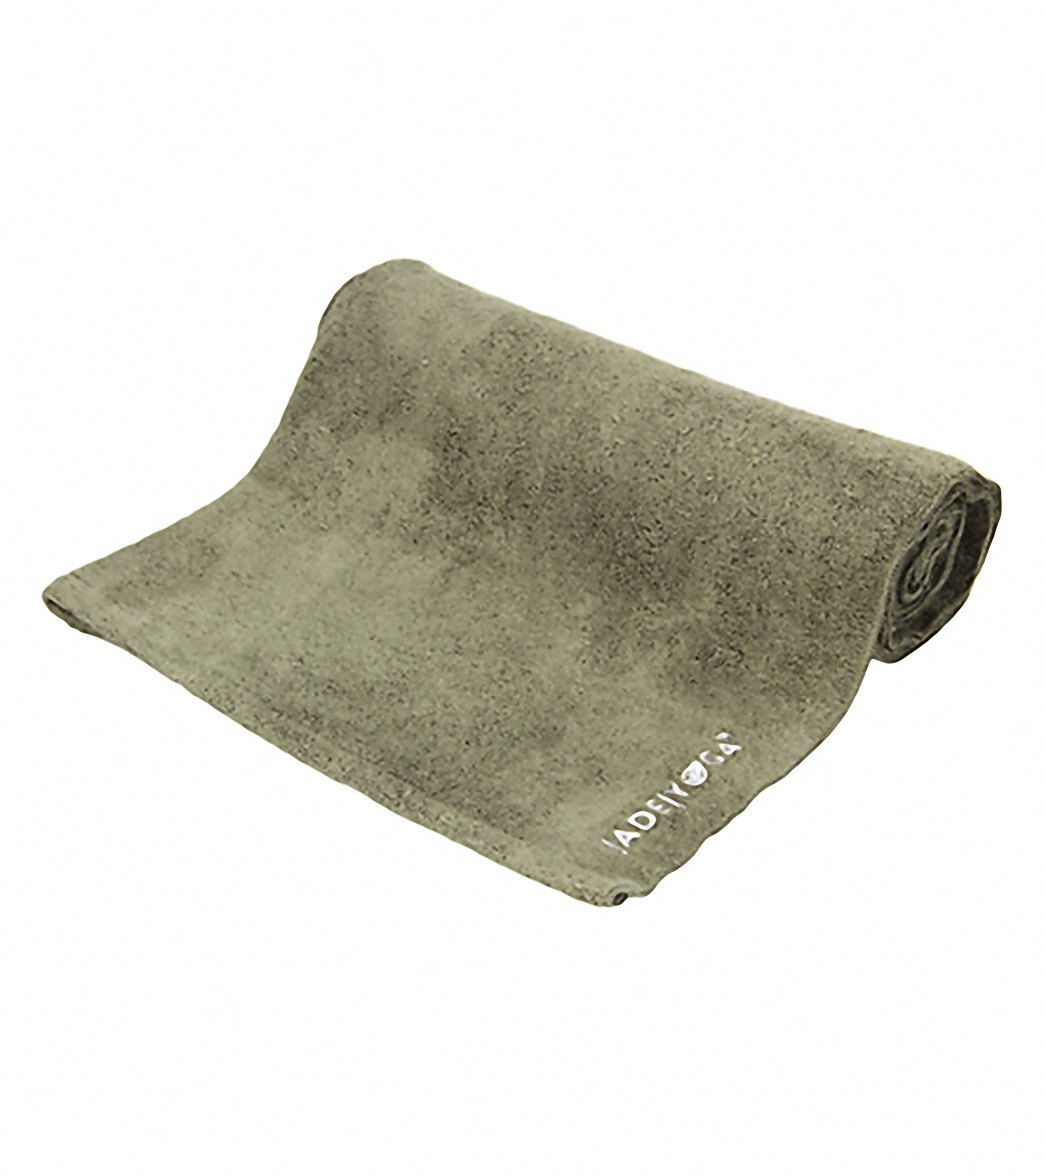 Hot Yoga Microfiber Mat Towel with Grip Dots Sweat Absorbent Non